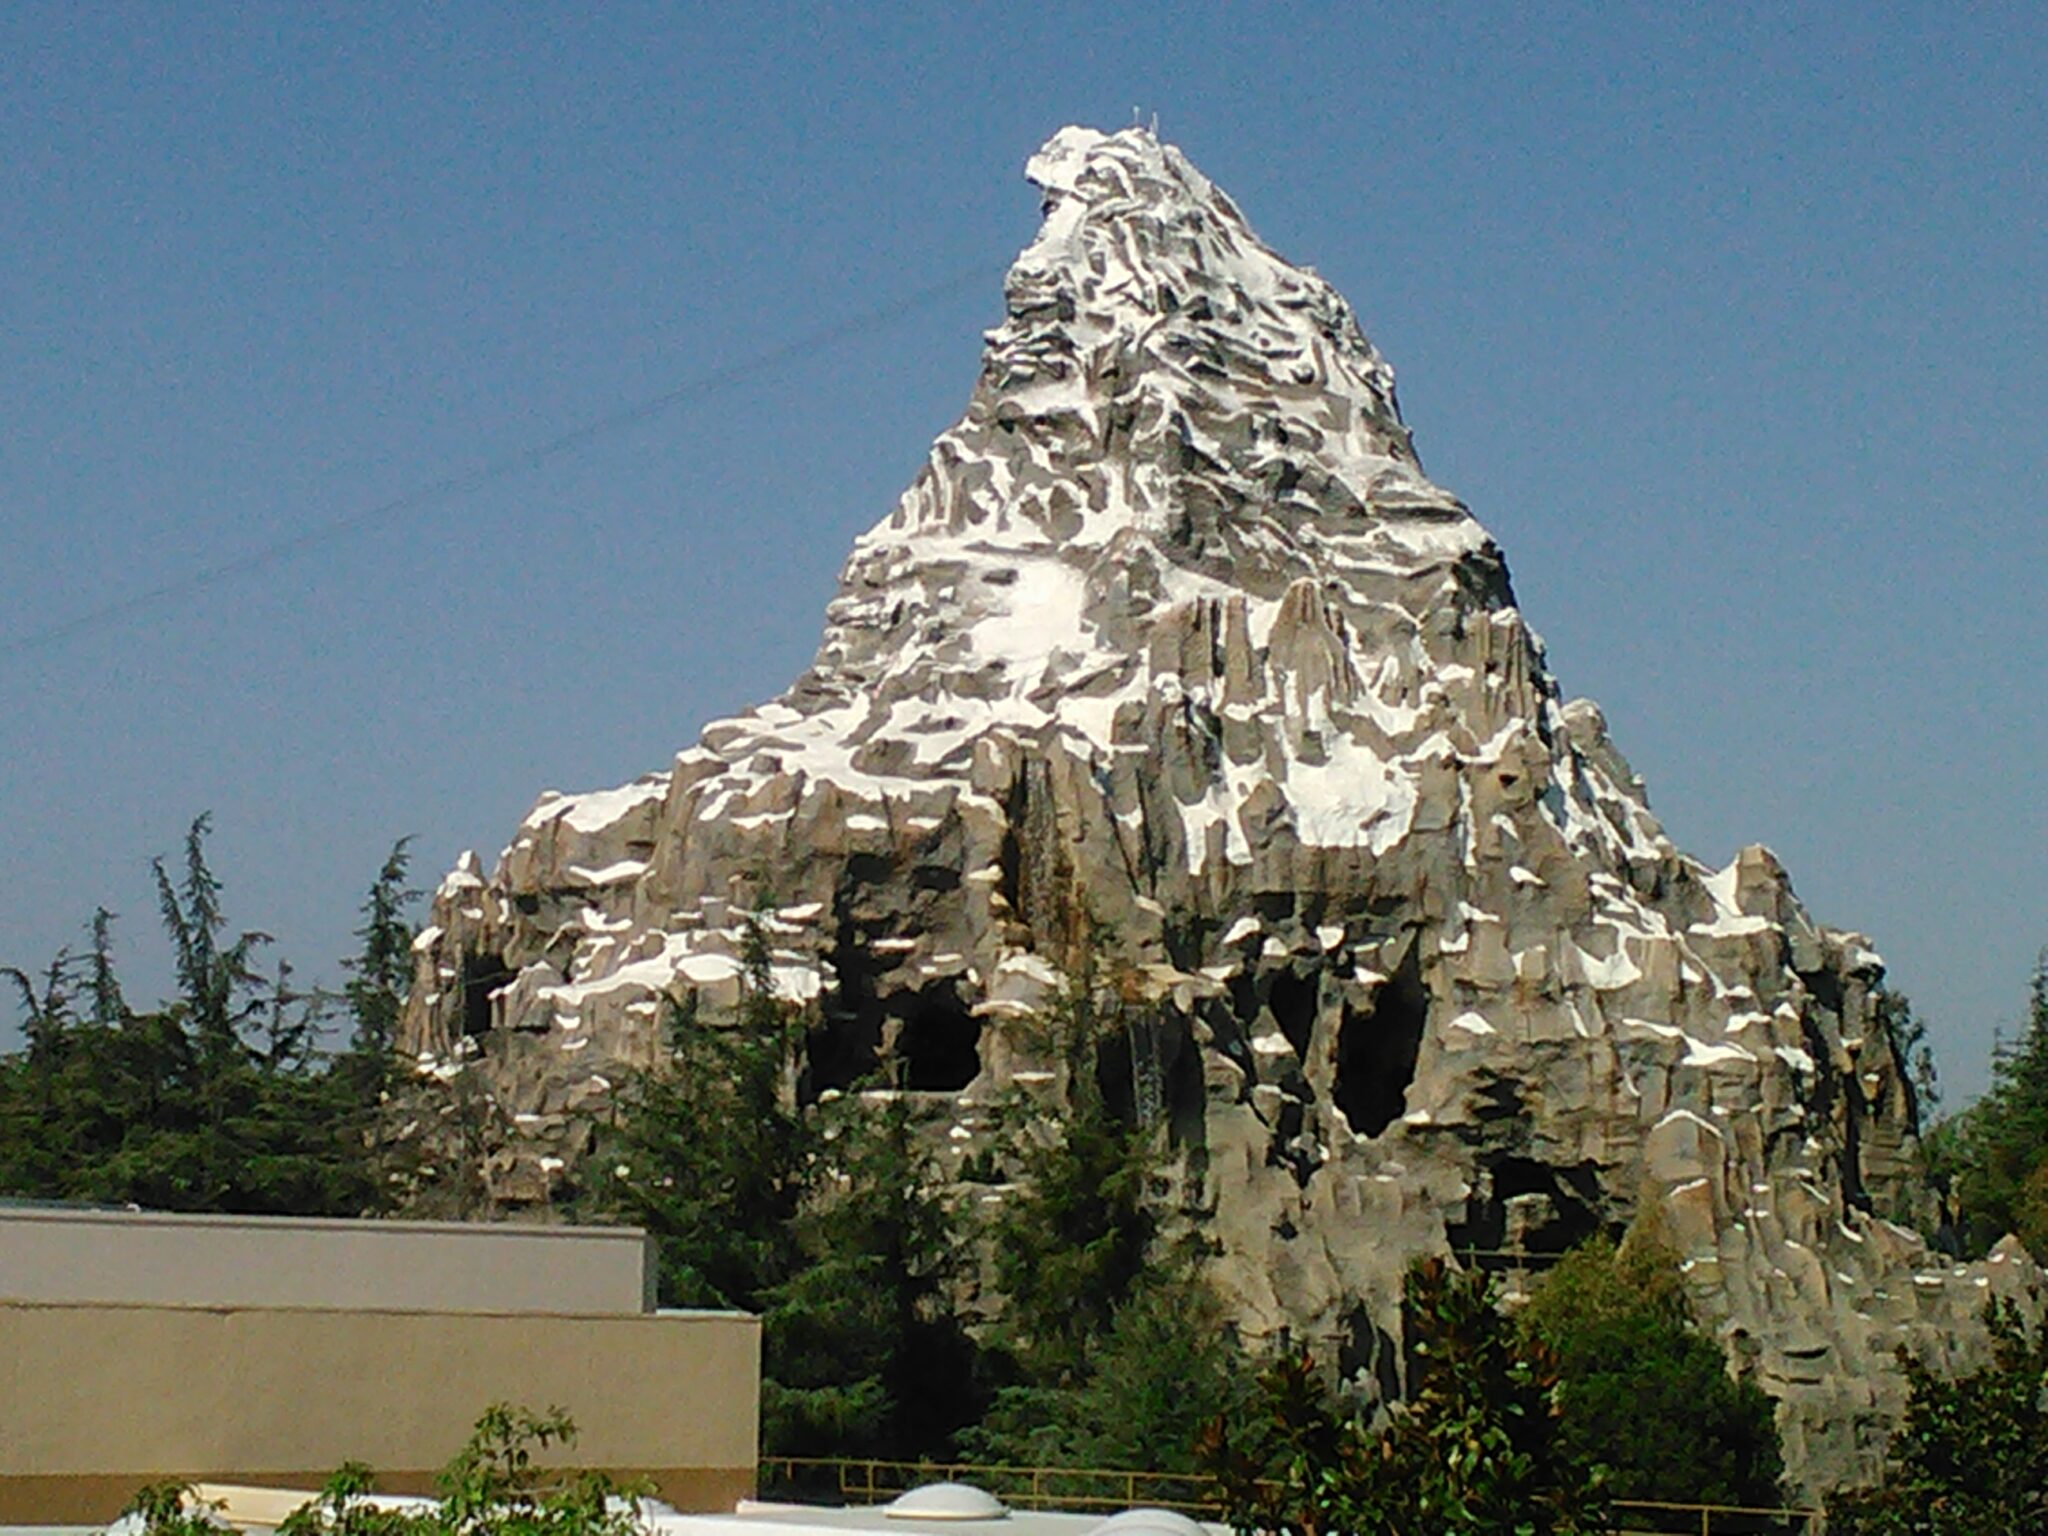 The Matterhorn Bobsleds at Disneyland- Ride Review